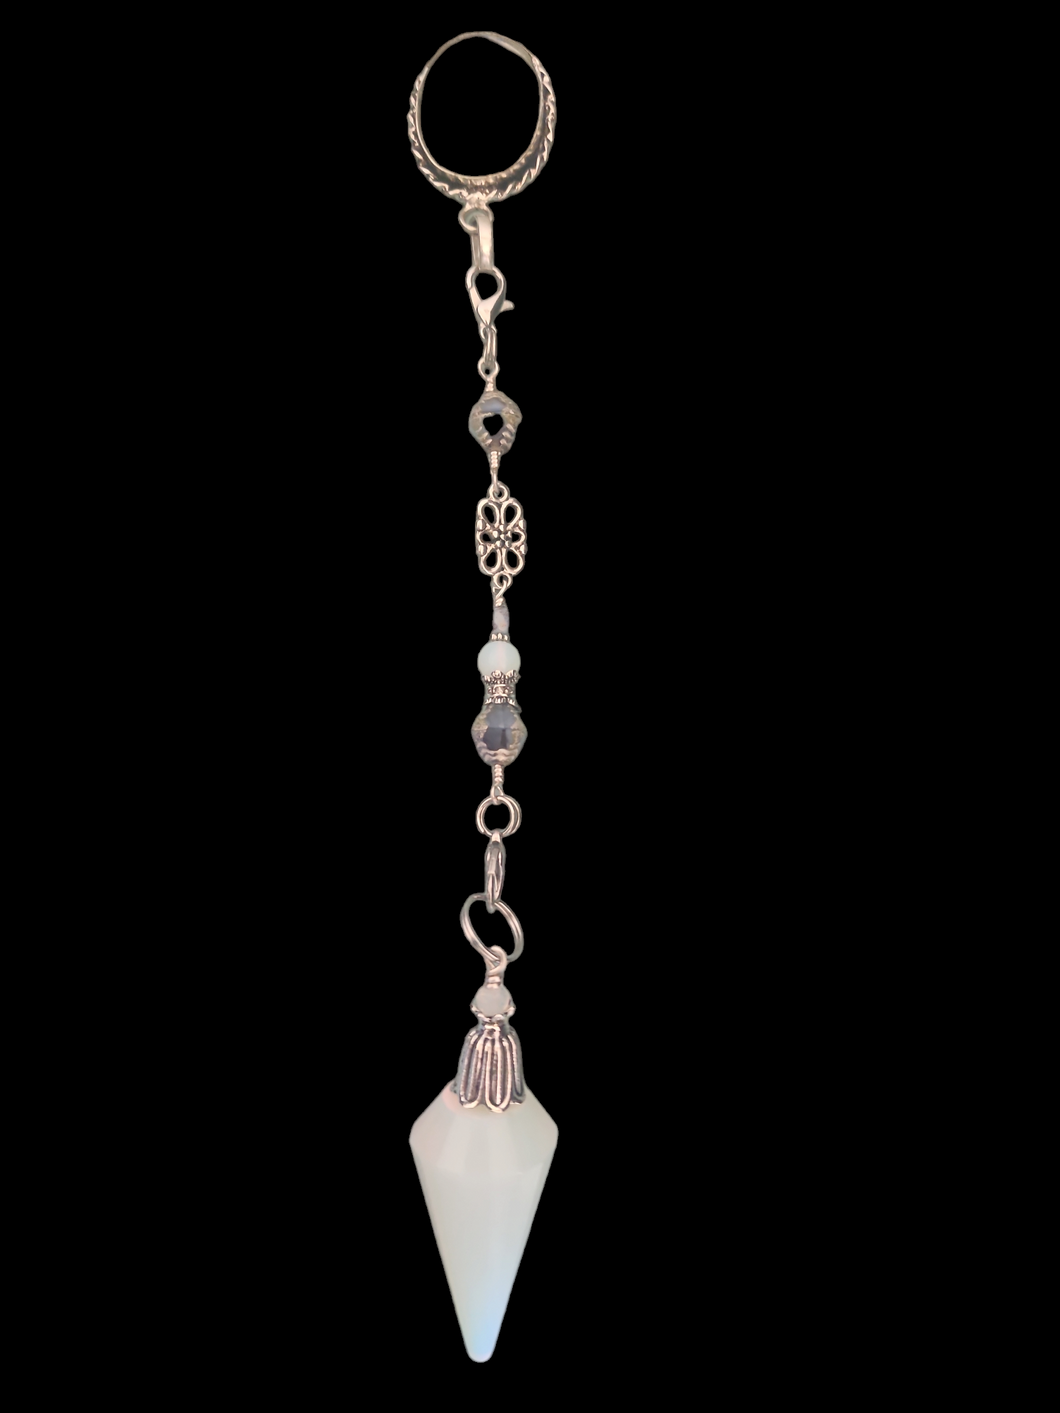 Opalite and Czech Glass - Wearable Pendulum